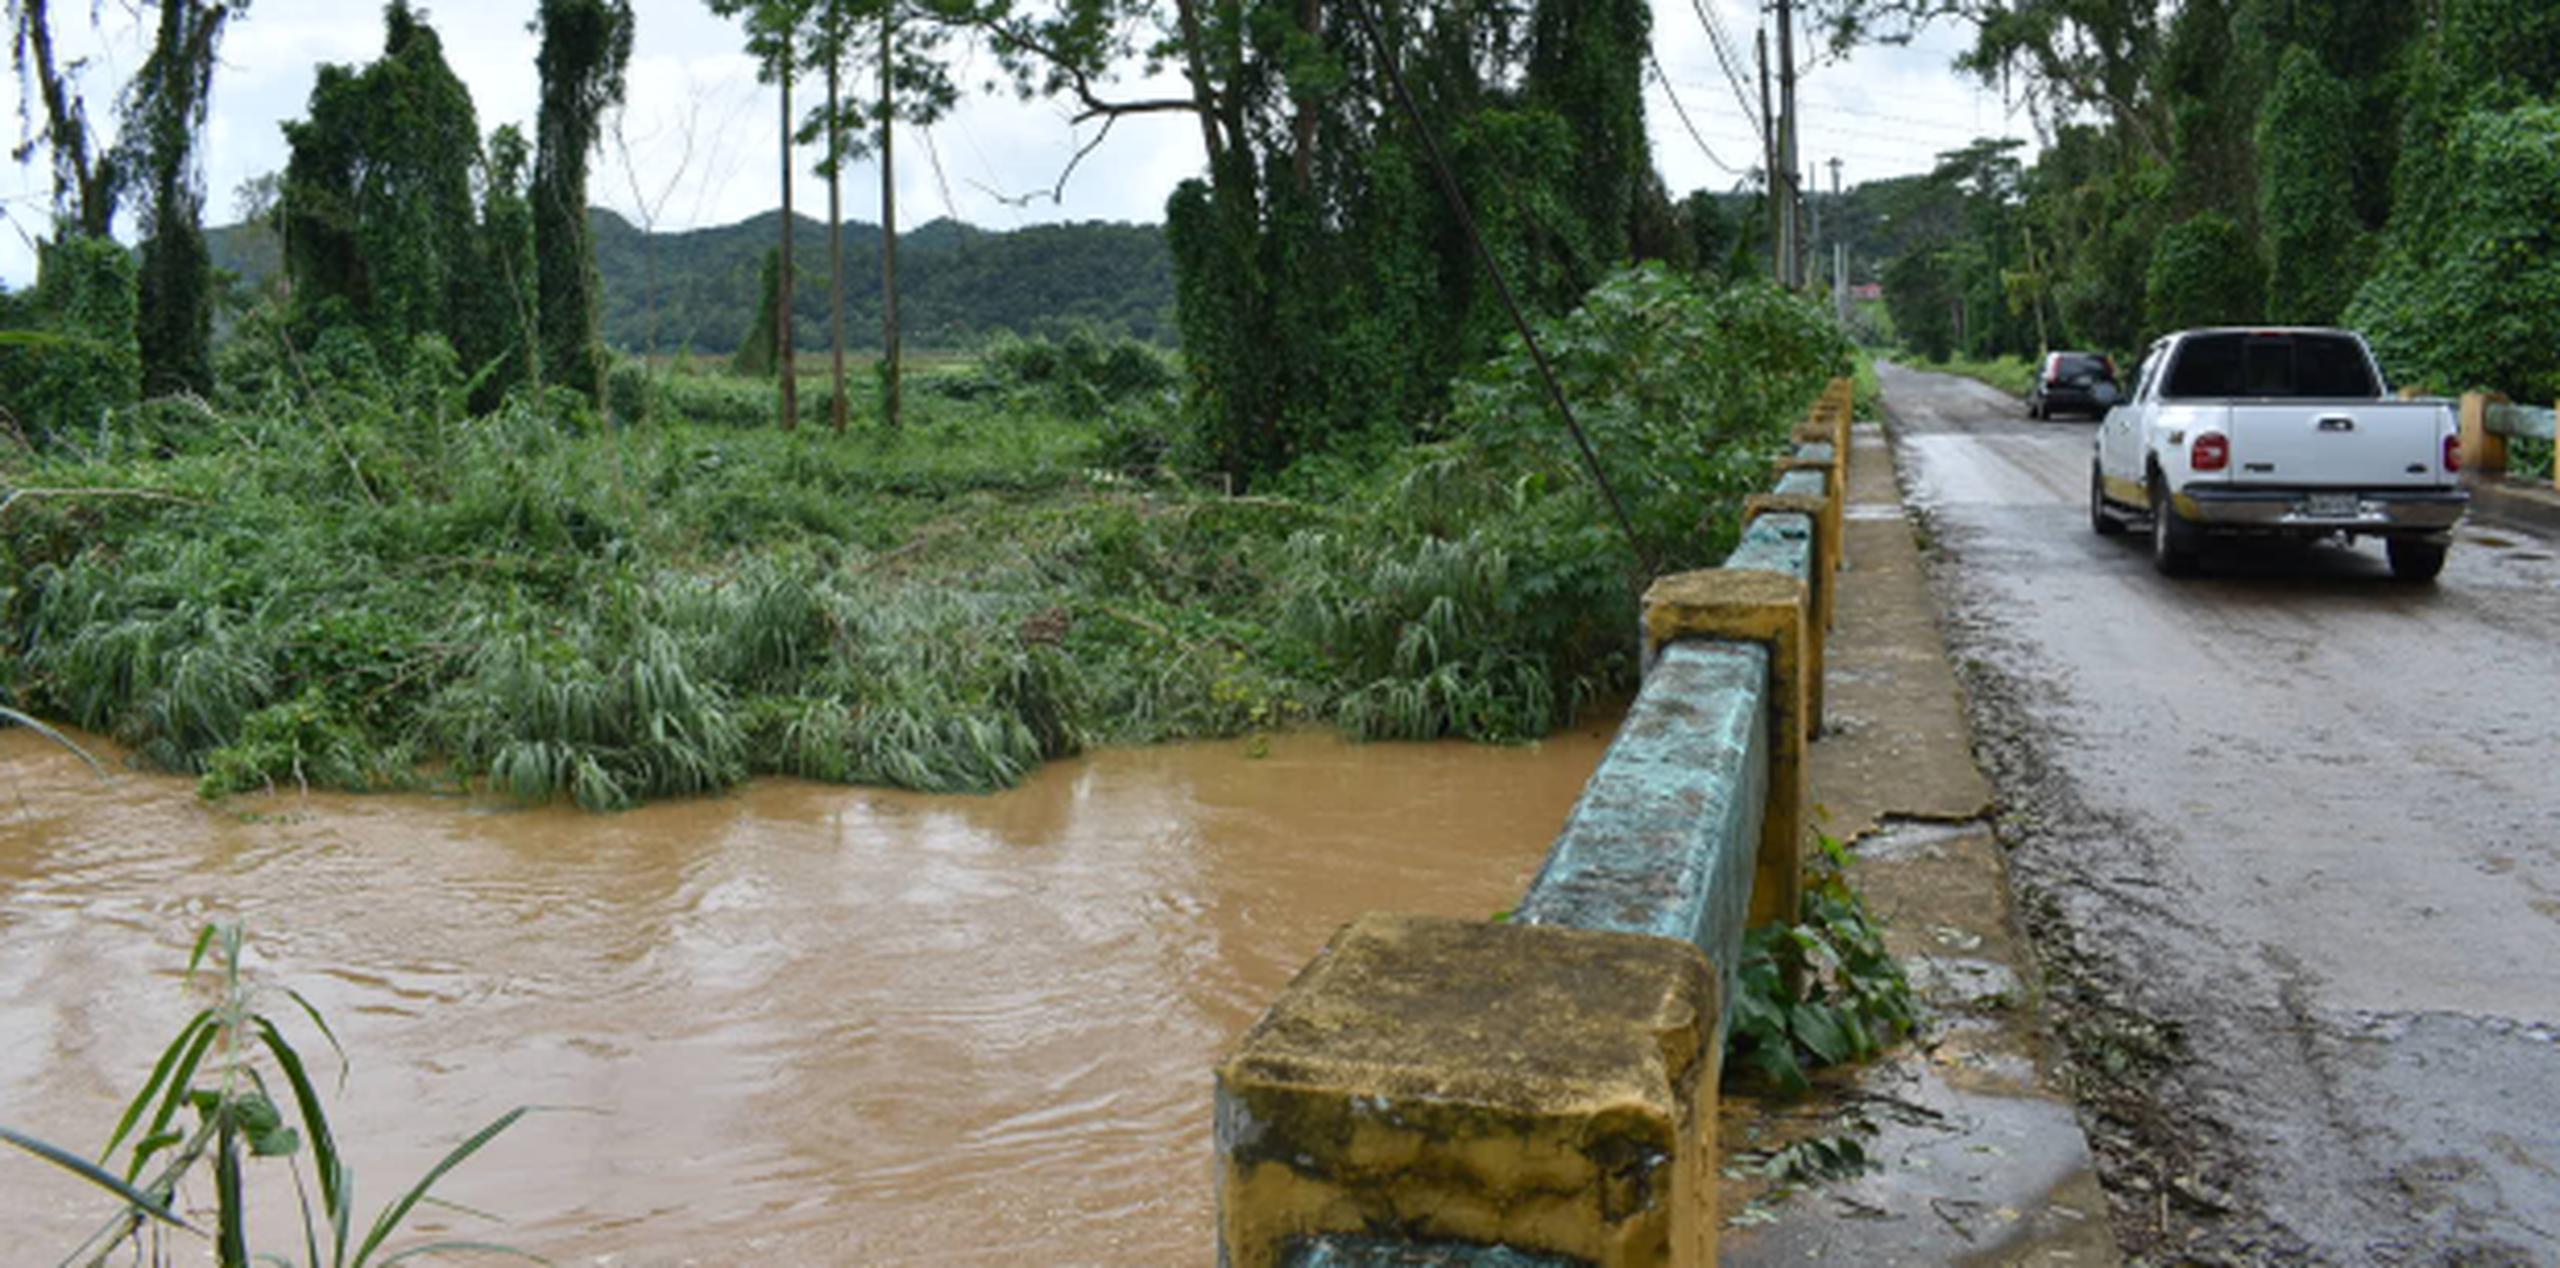 Embravecidos varios ríos de la zona se desbordaron peligrosamente. (Suministrada)